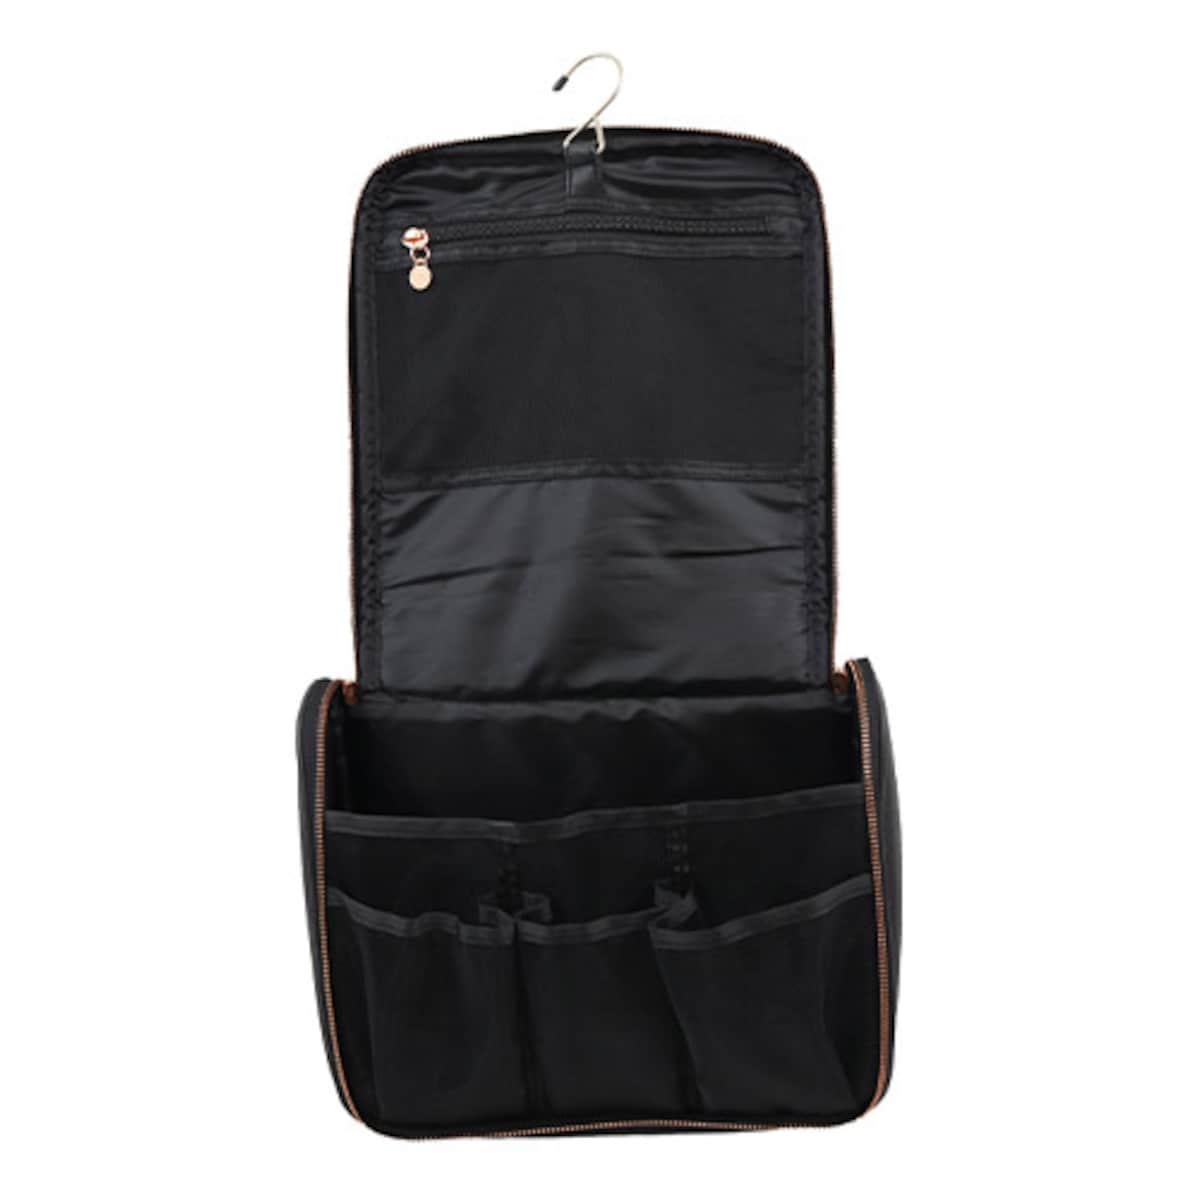 Wicked Sista Premium Black Travel Bag With Hook